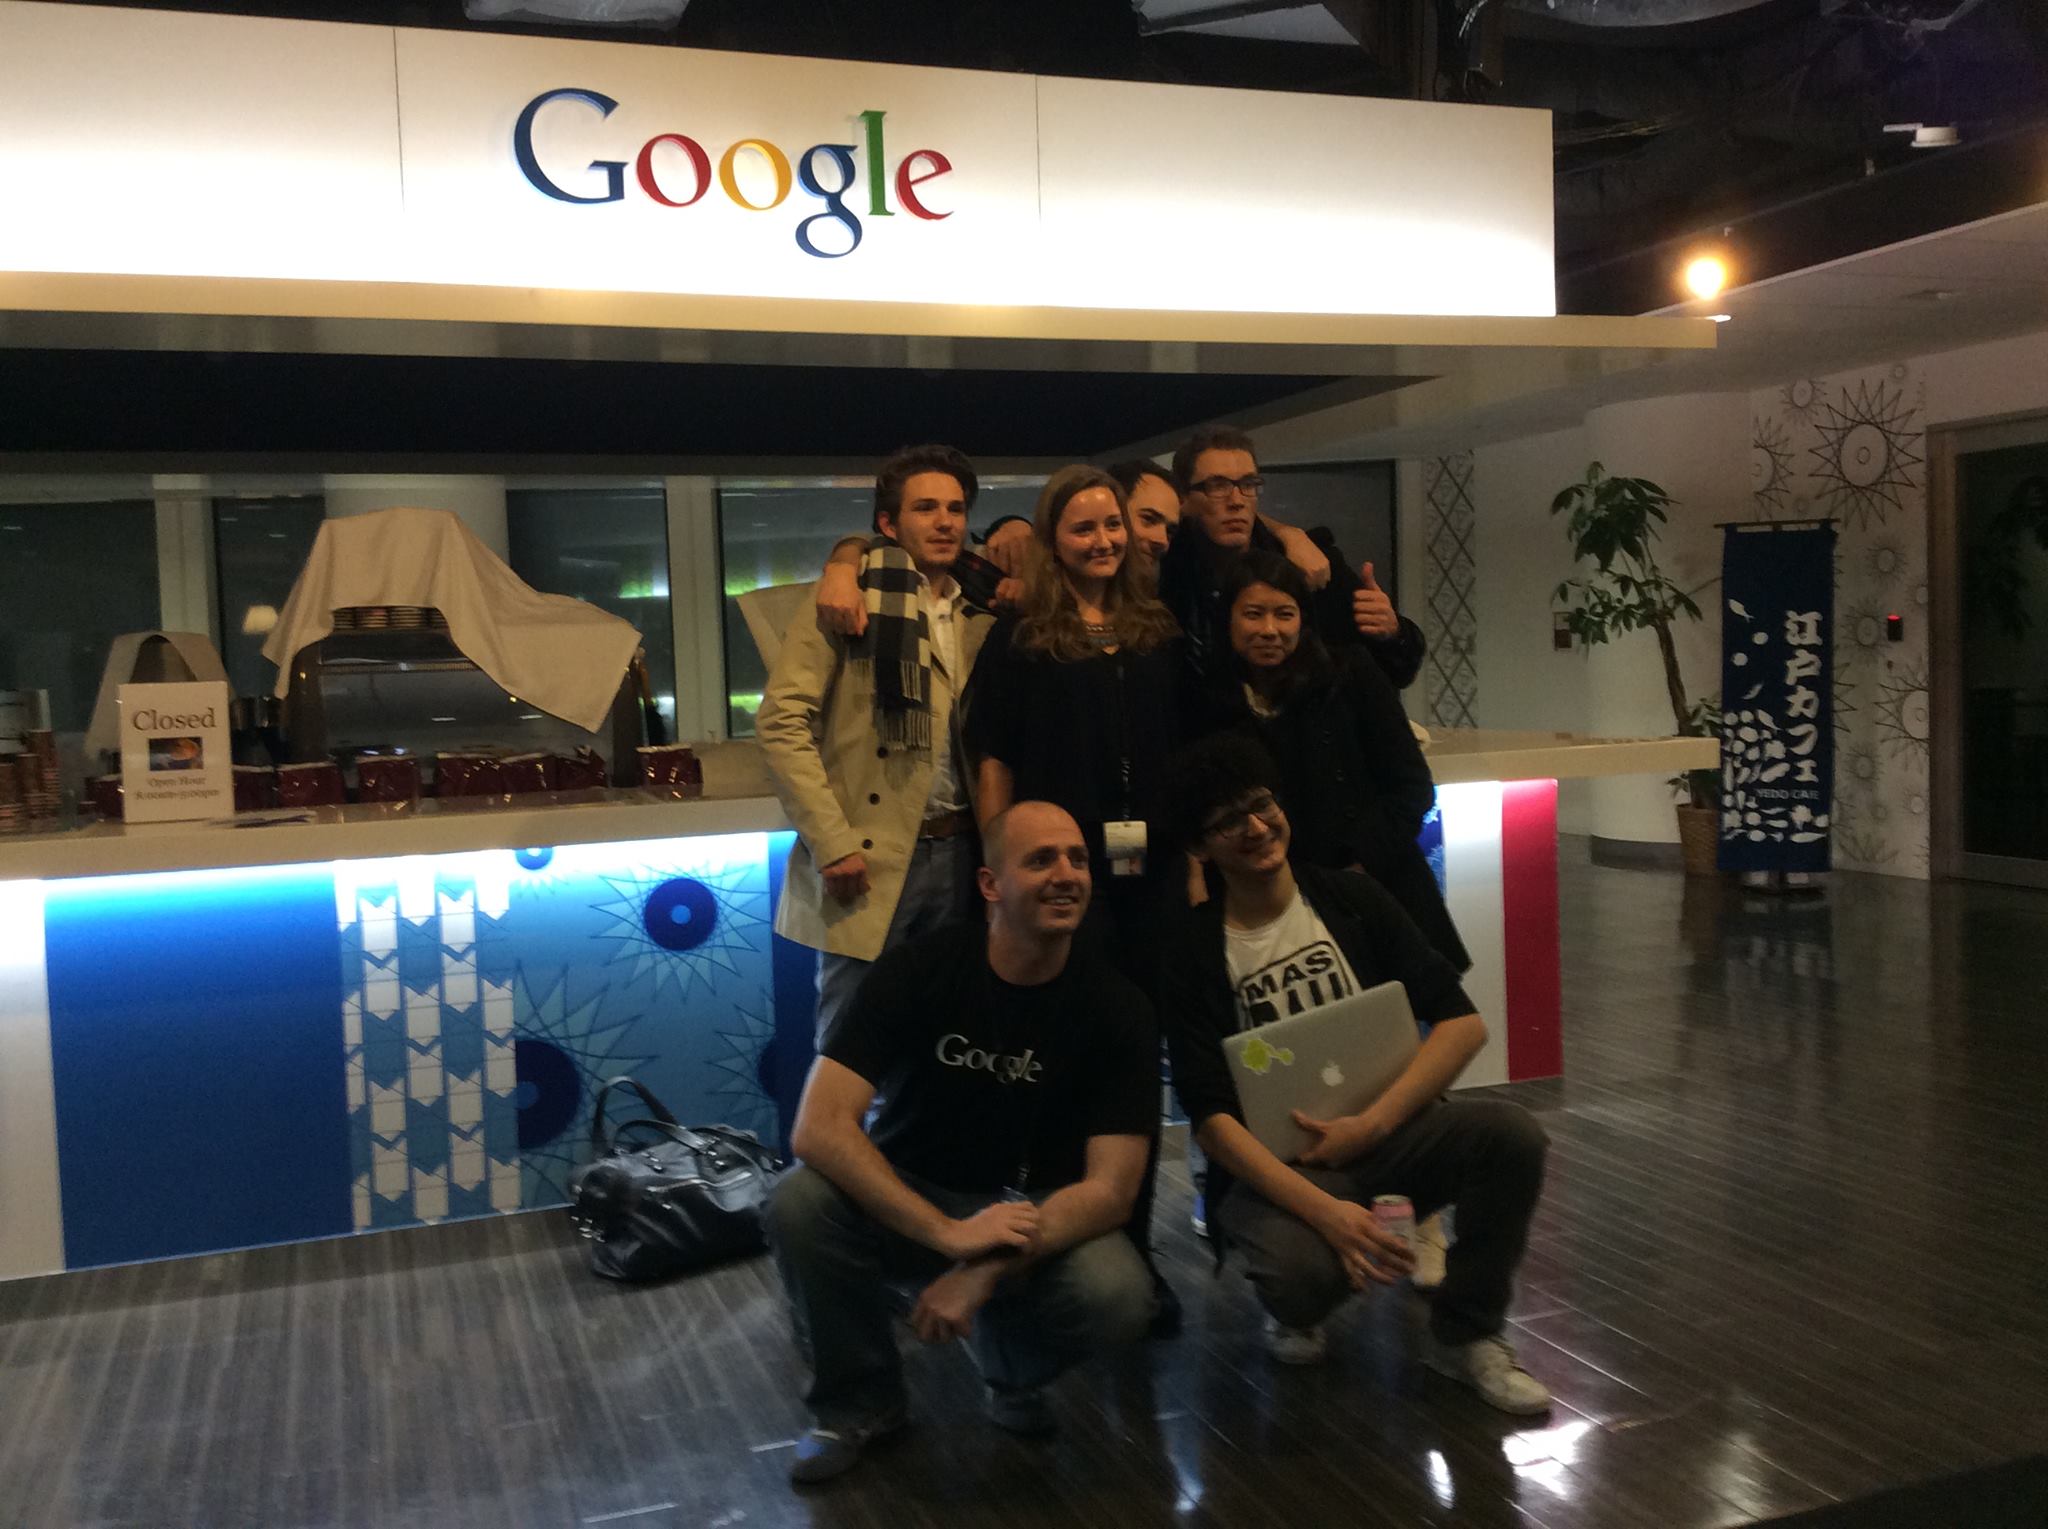 Inside the Google office lobby